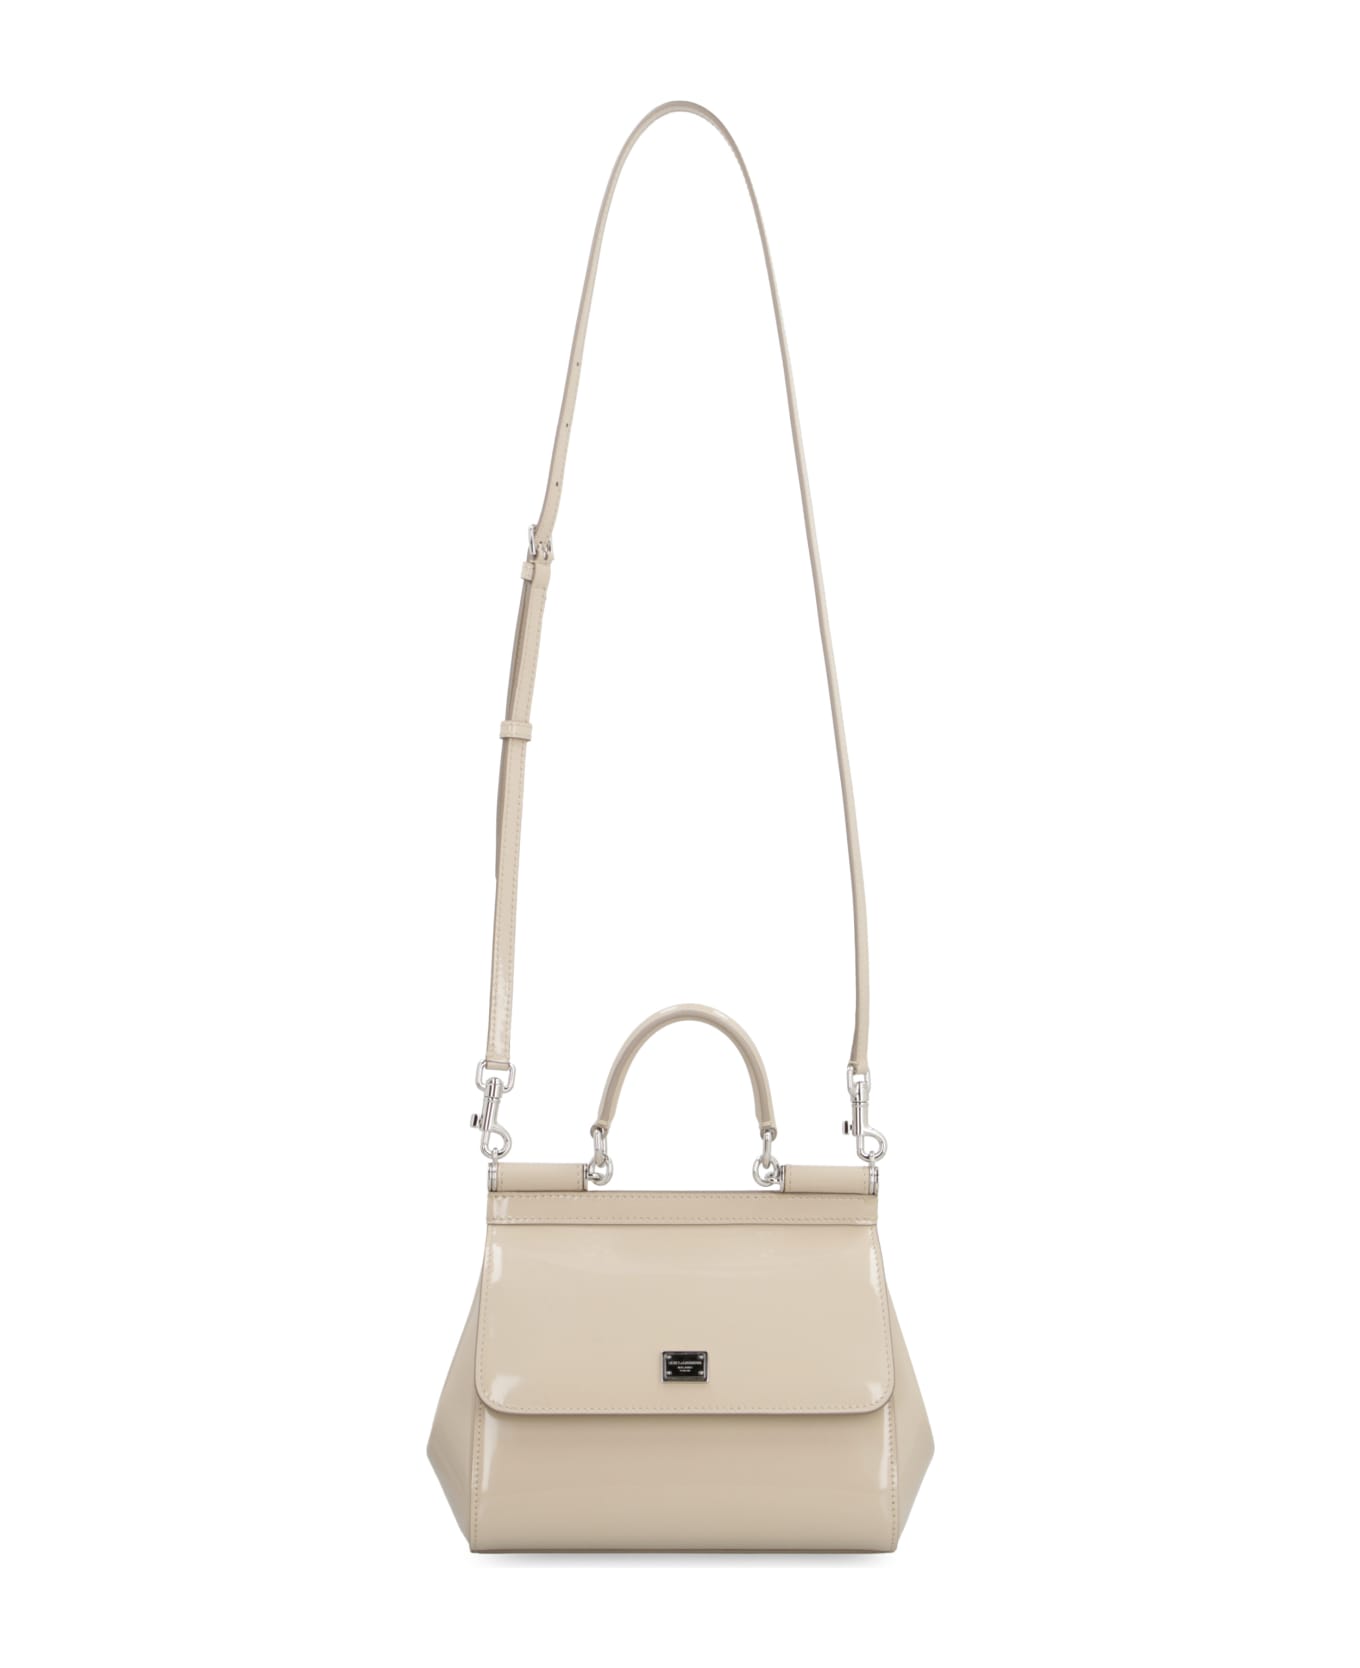 Dolce & Gabbana Sicily Leather Mini Handbag - Beige